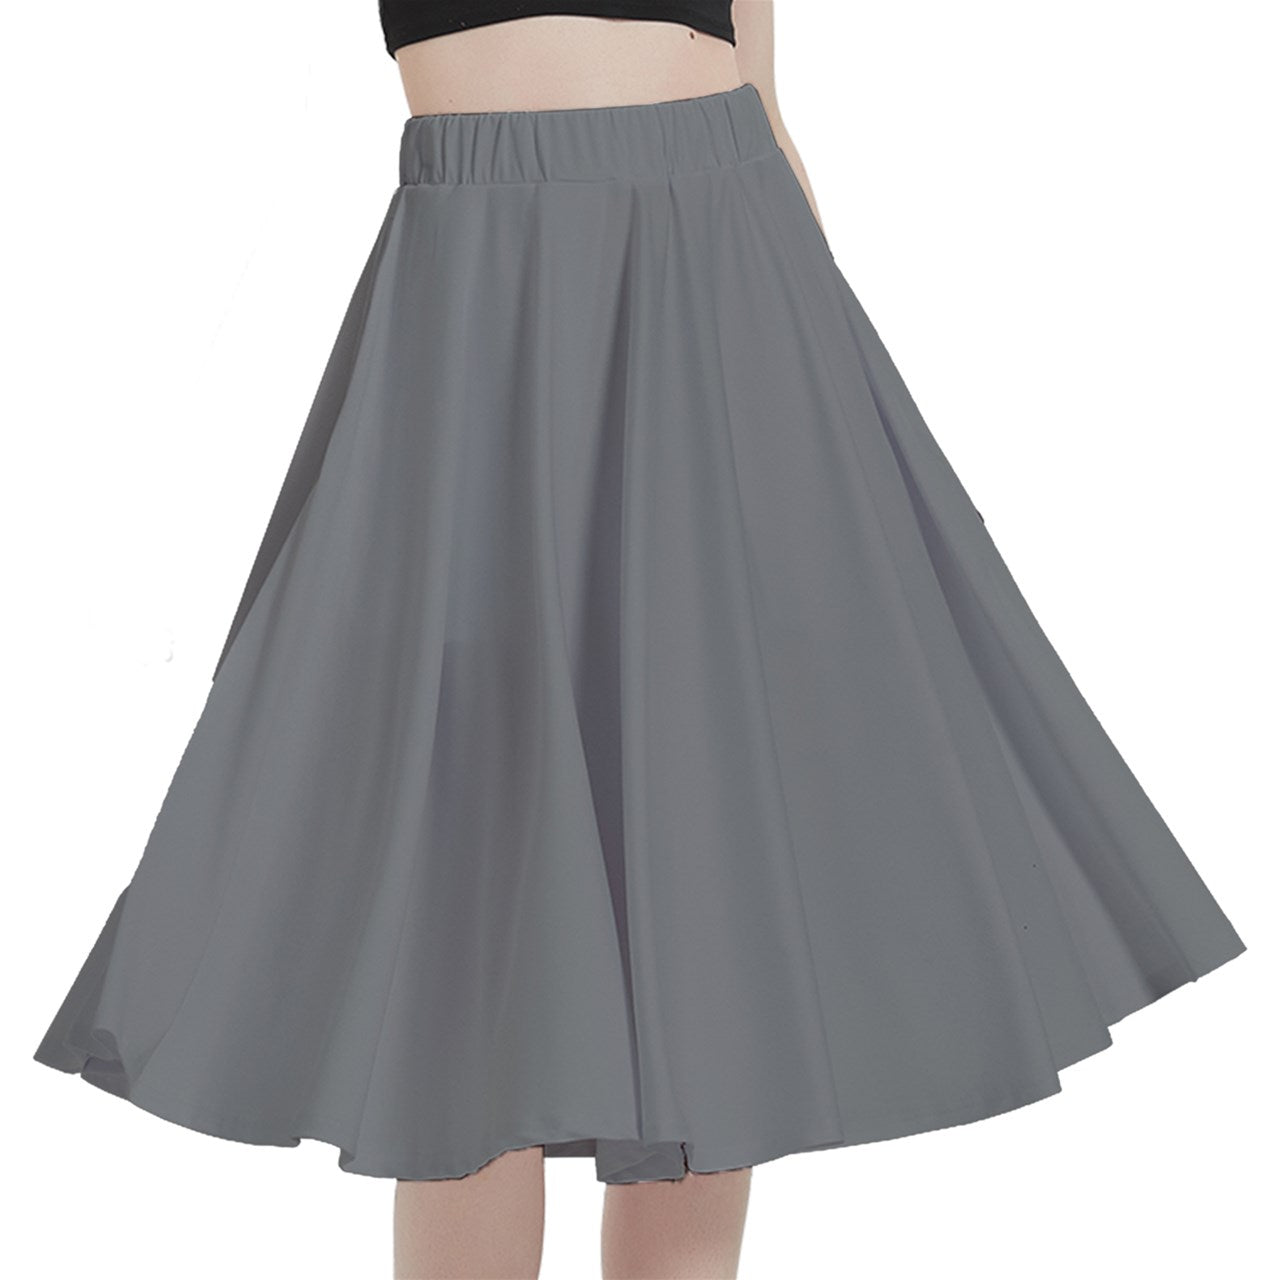 Grey A-Line Midi Skirt With Pocket